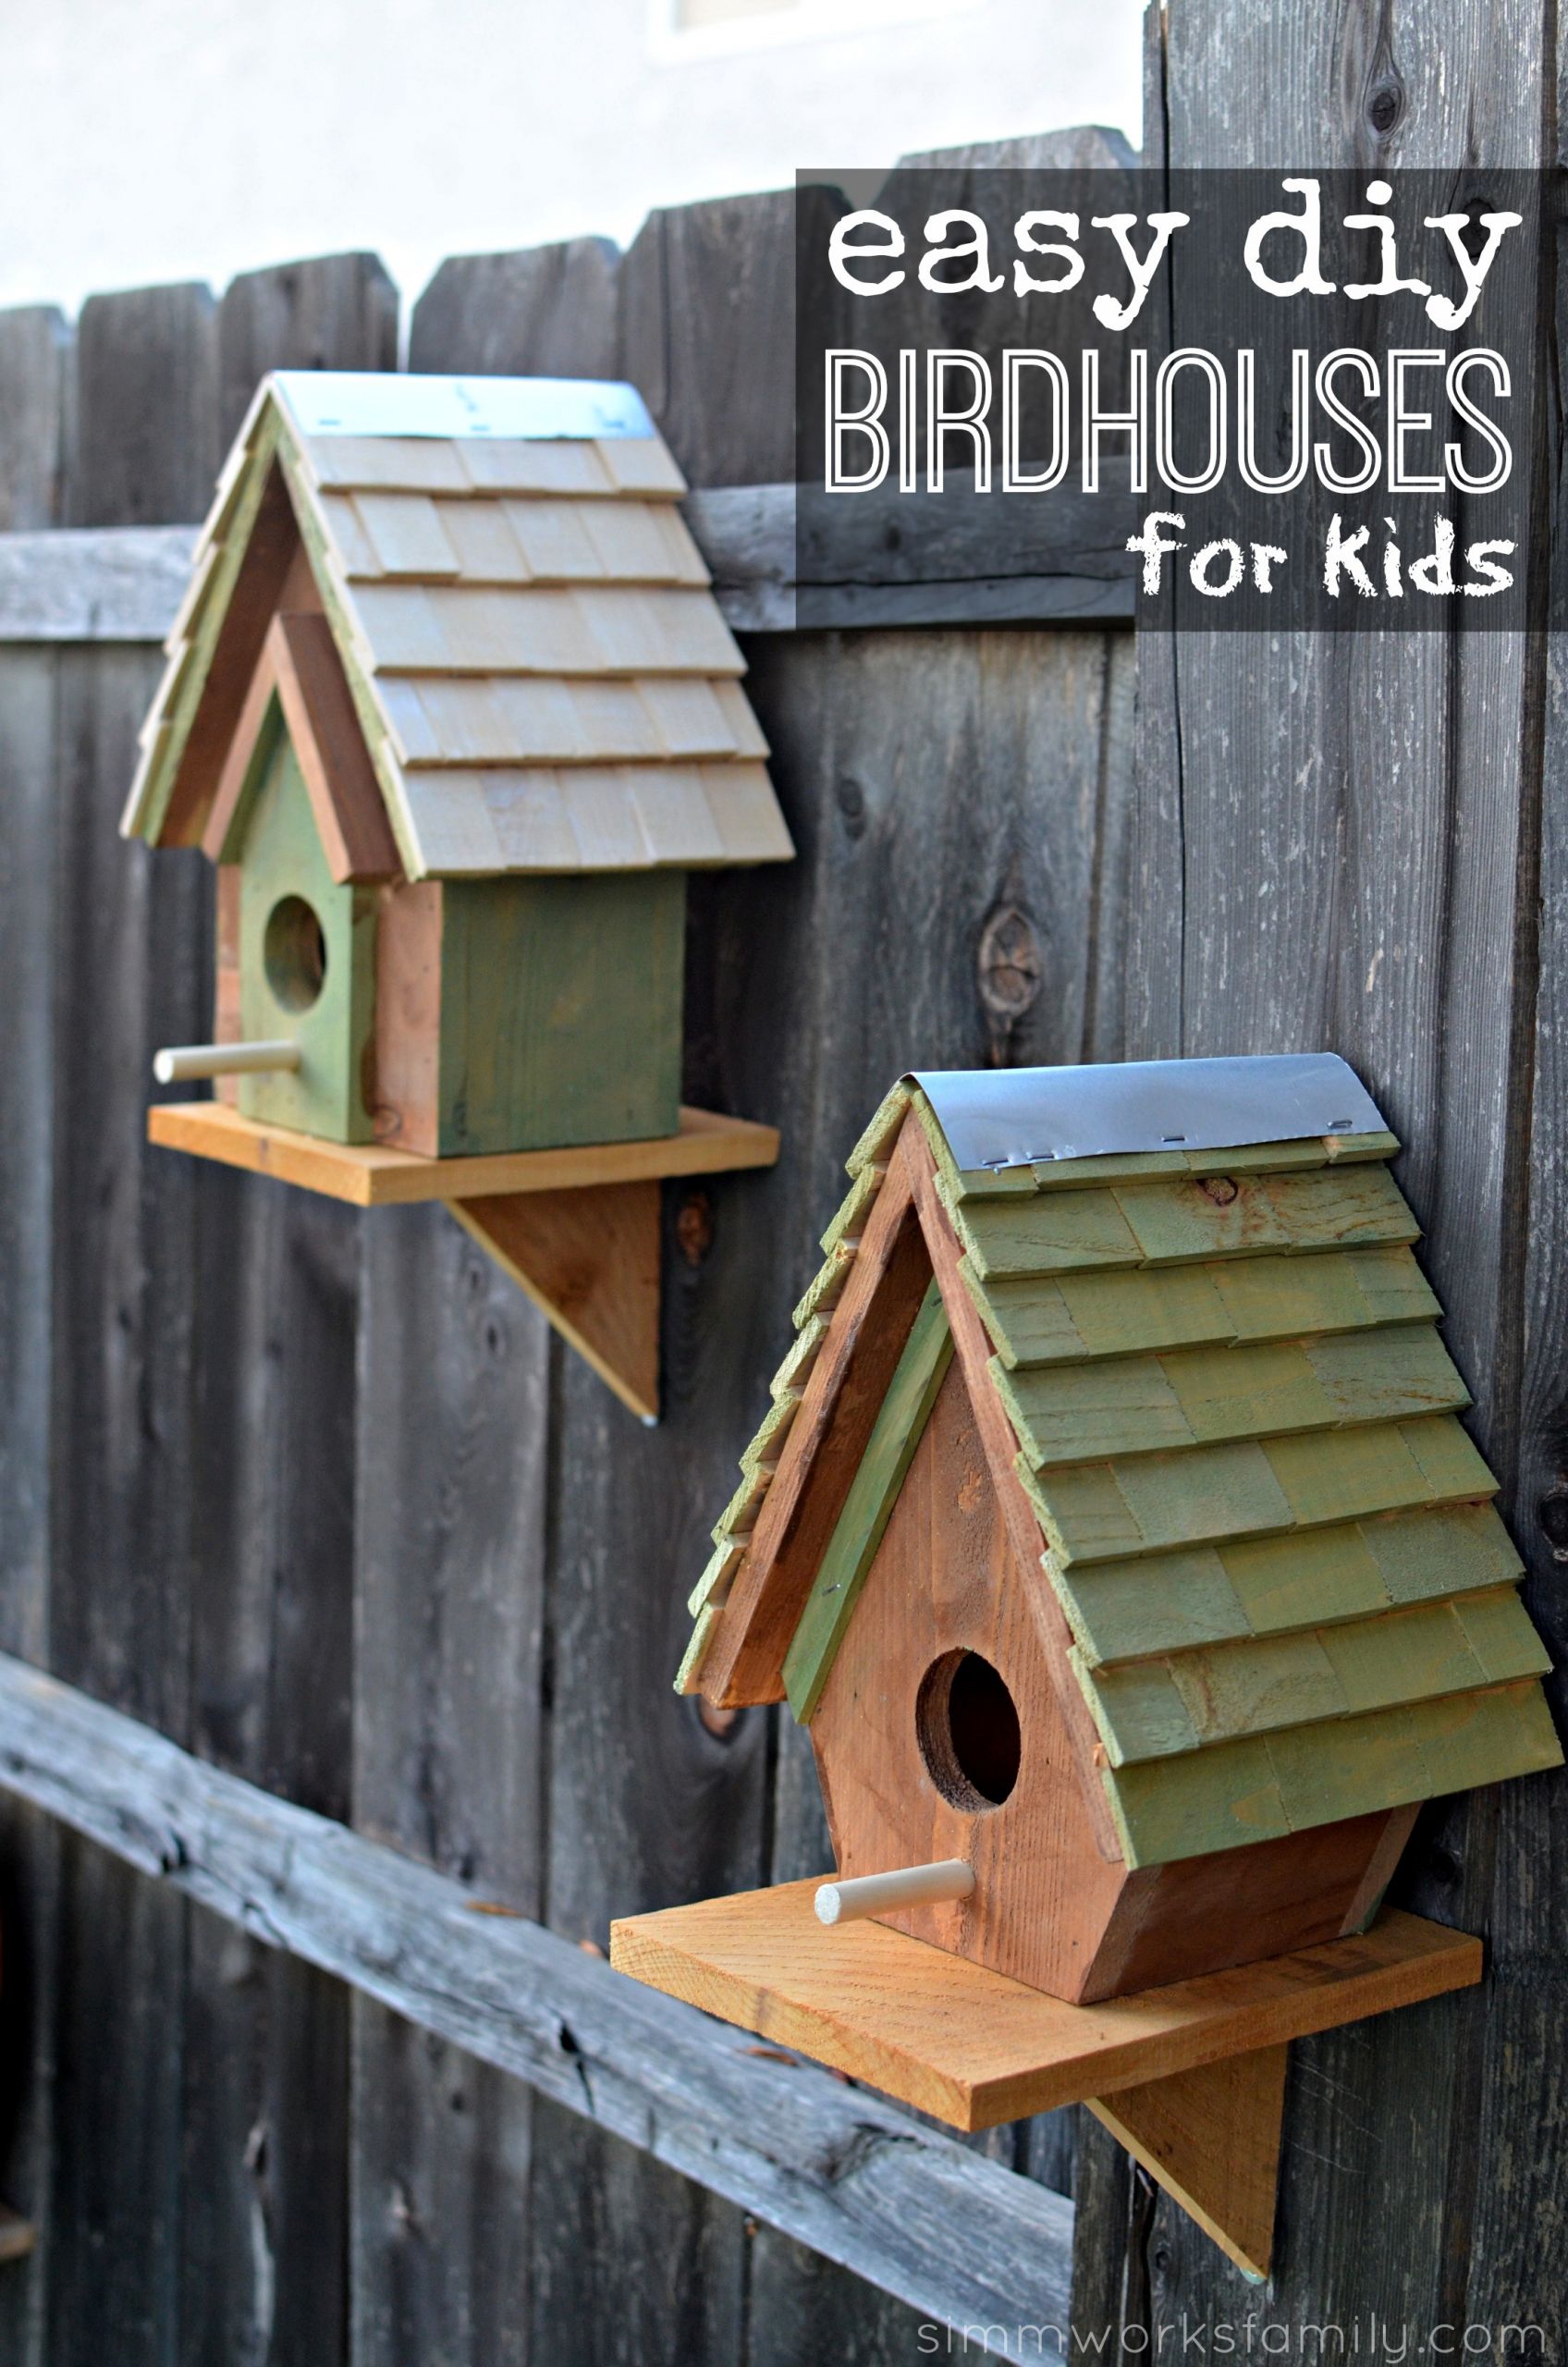 DIY Birdhouse For Kids
 DIY Birdhouses Turning Inspiration into Reality